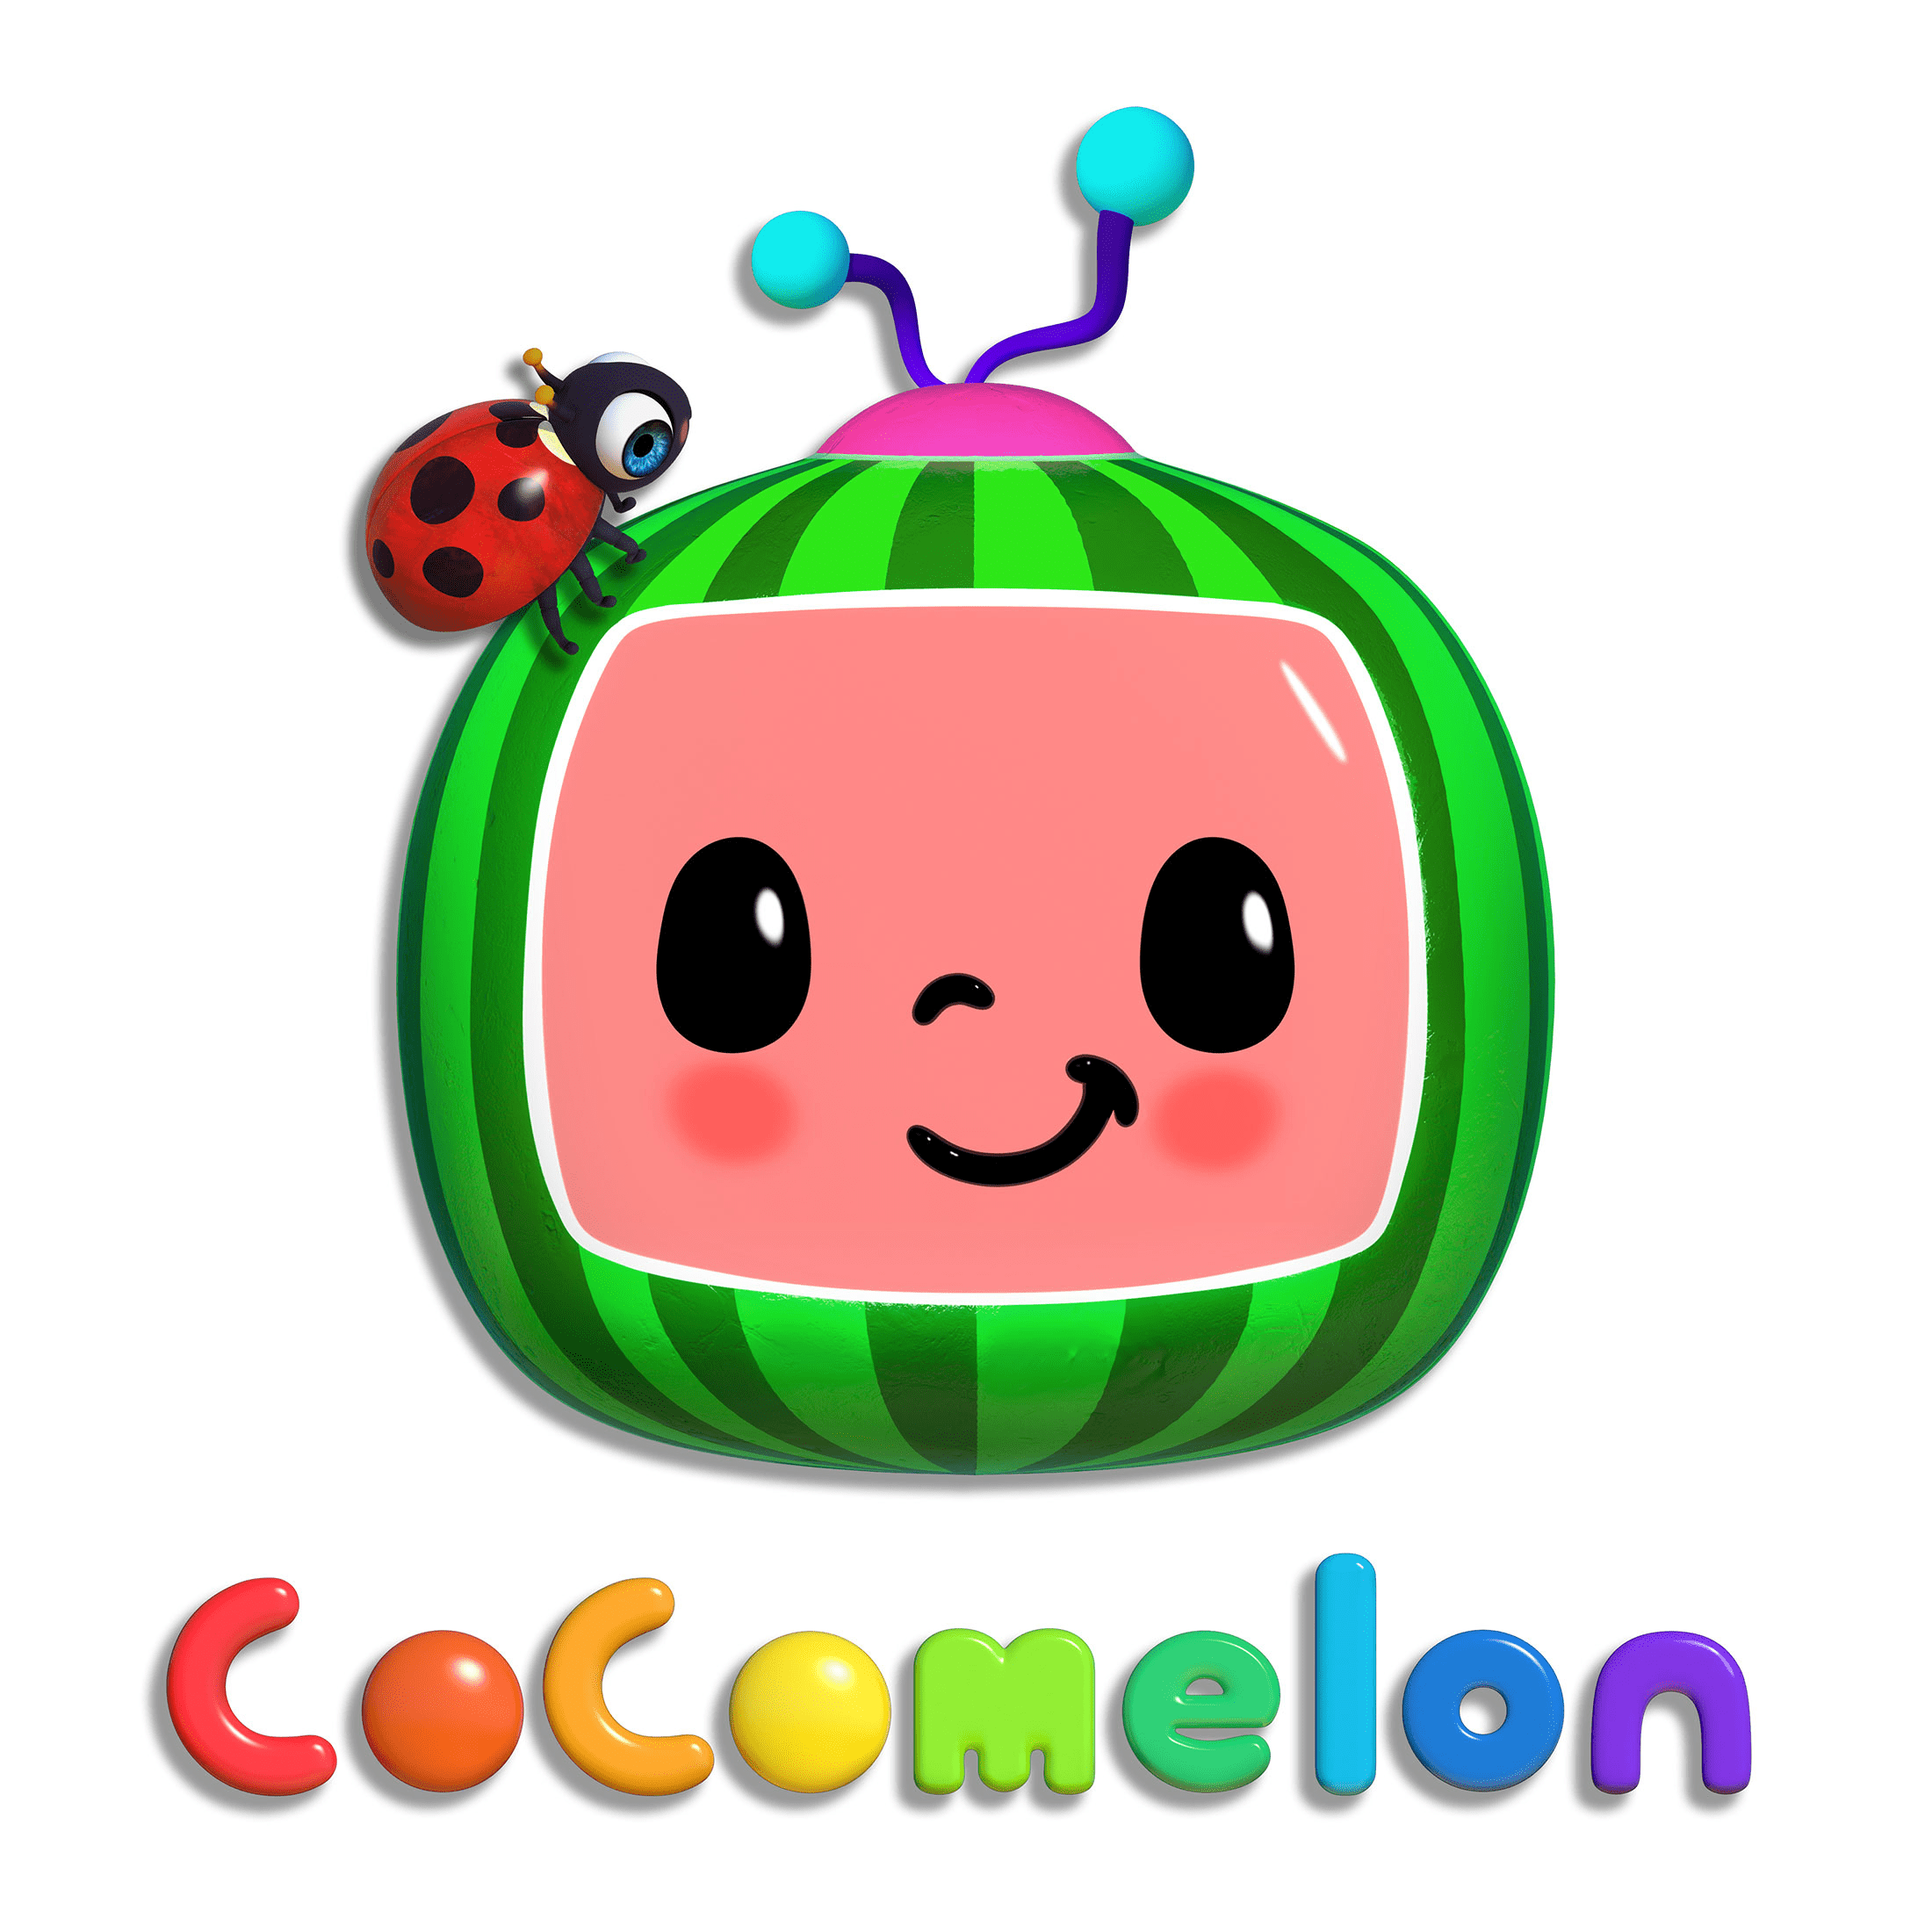 Cocomelon Logo Wallpaper - KoLPaPer - Awesome Free HD Wallpapers